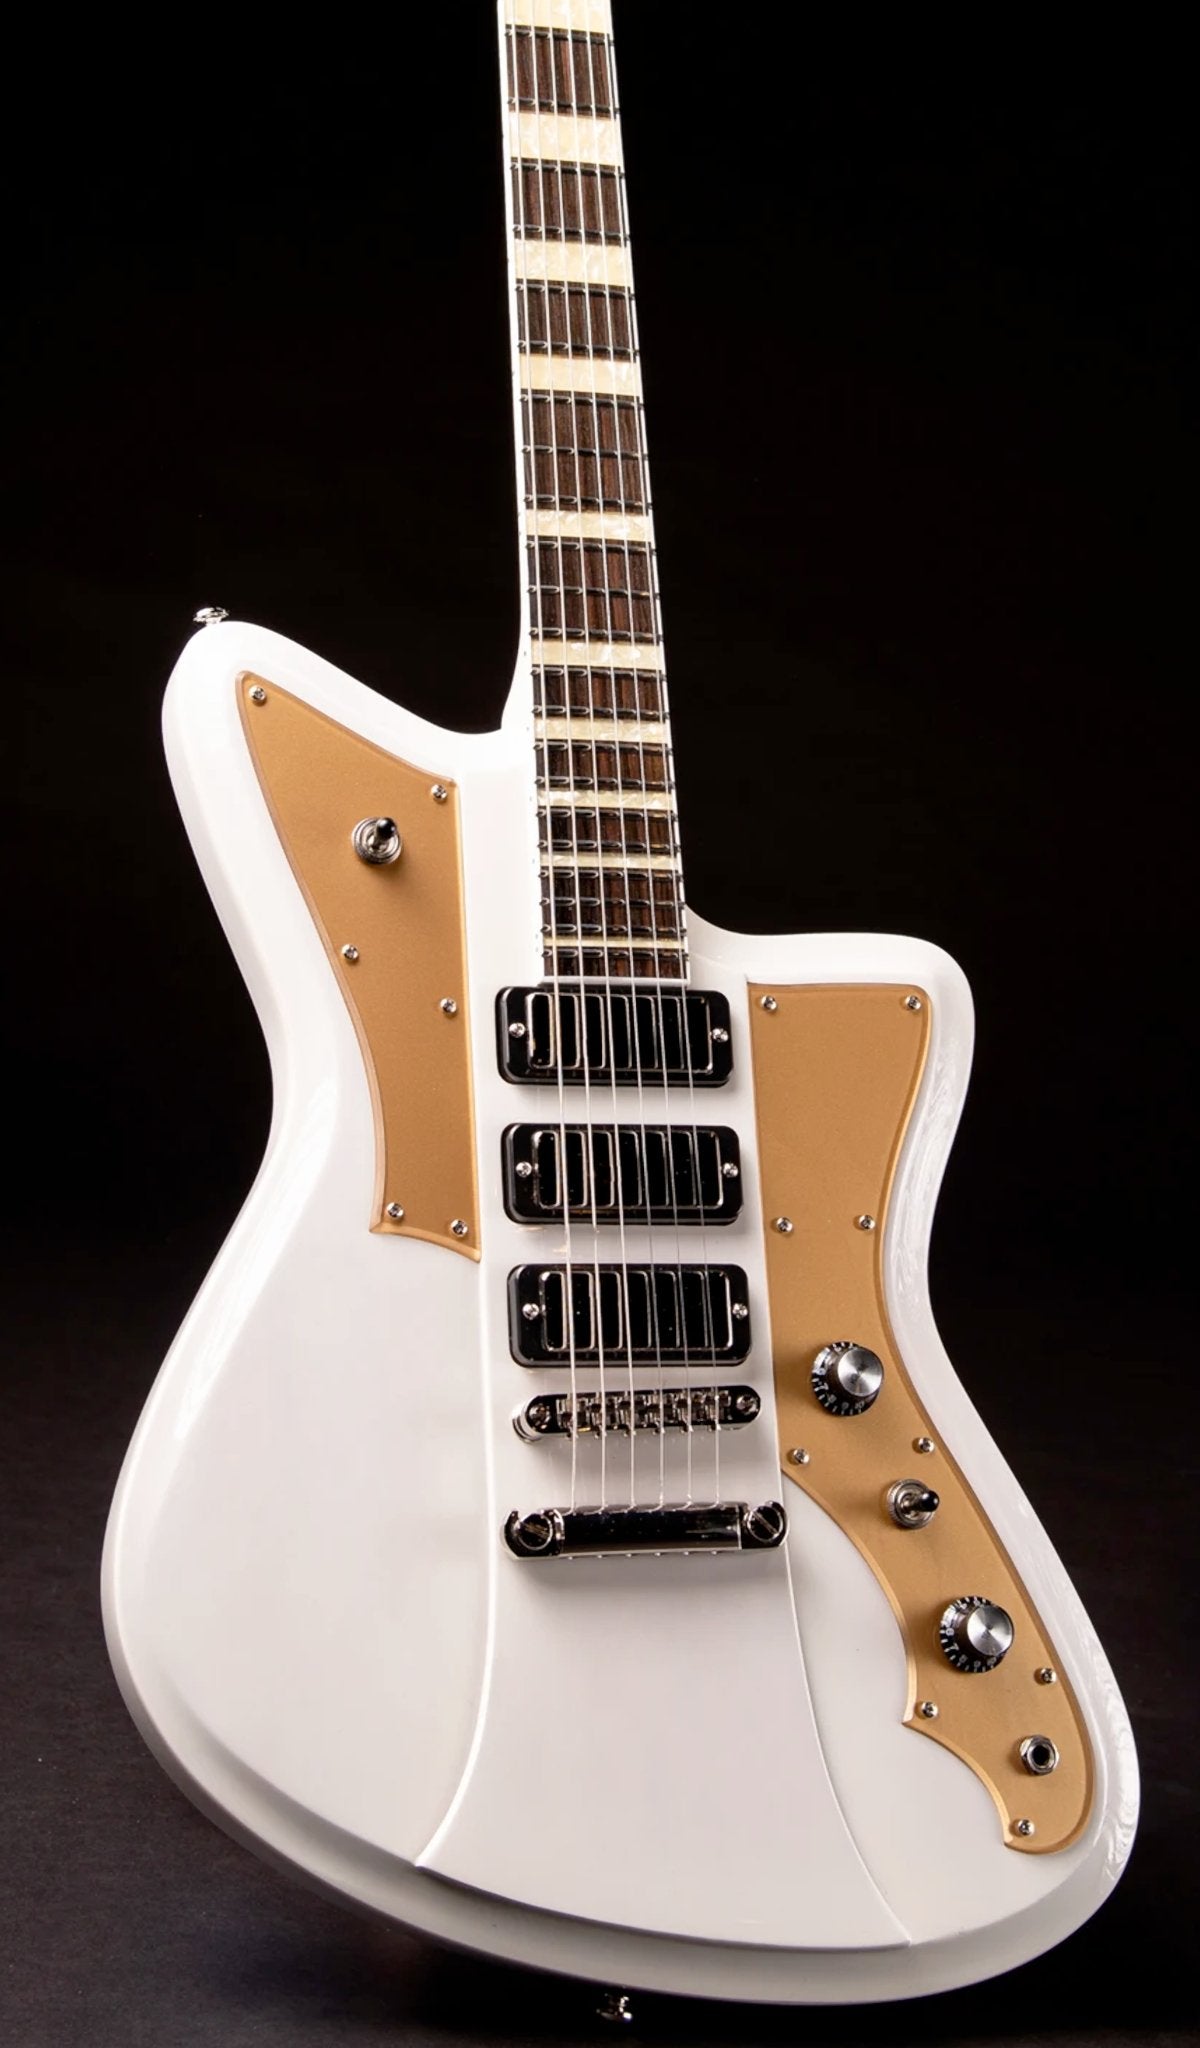 Eastwood Guitars Rivolta Mondata VIII Colomba White